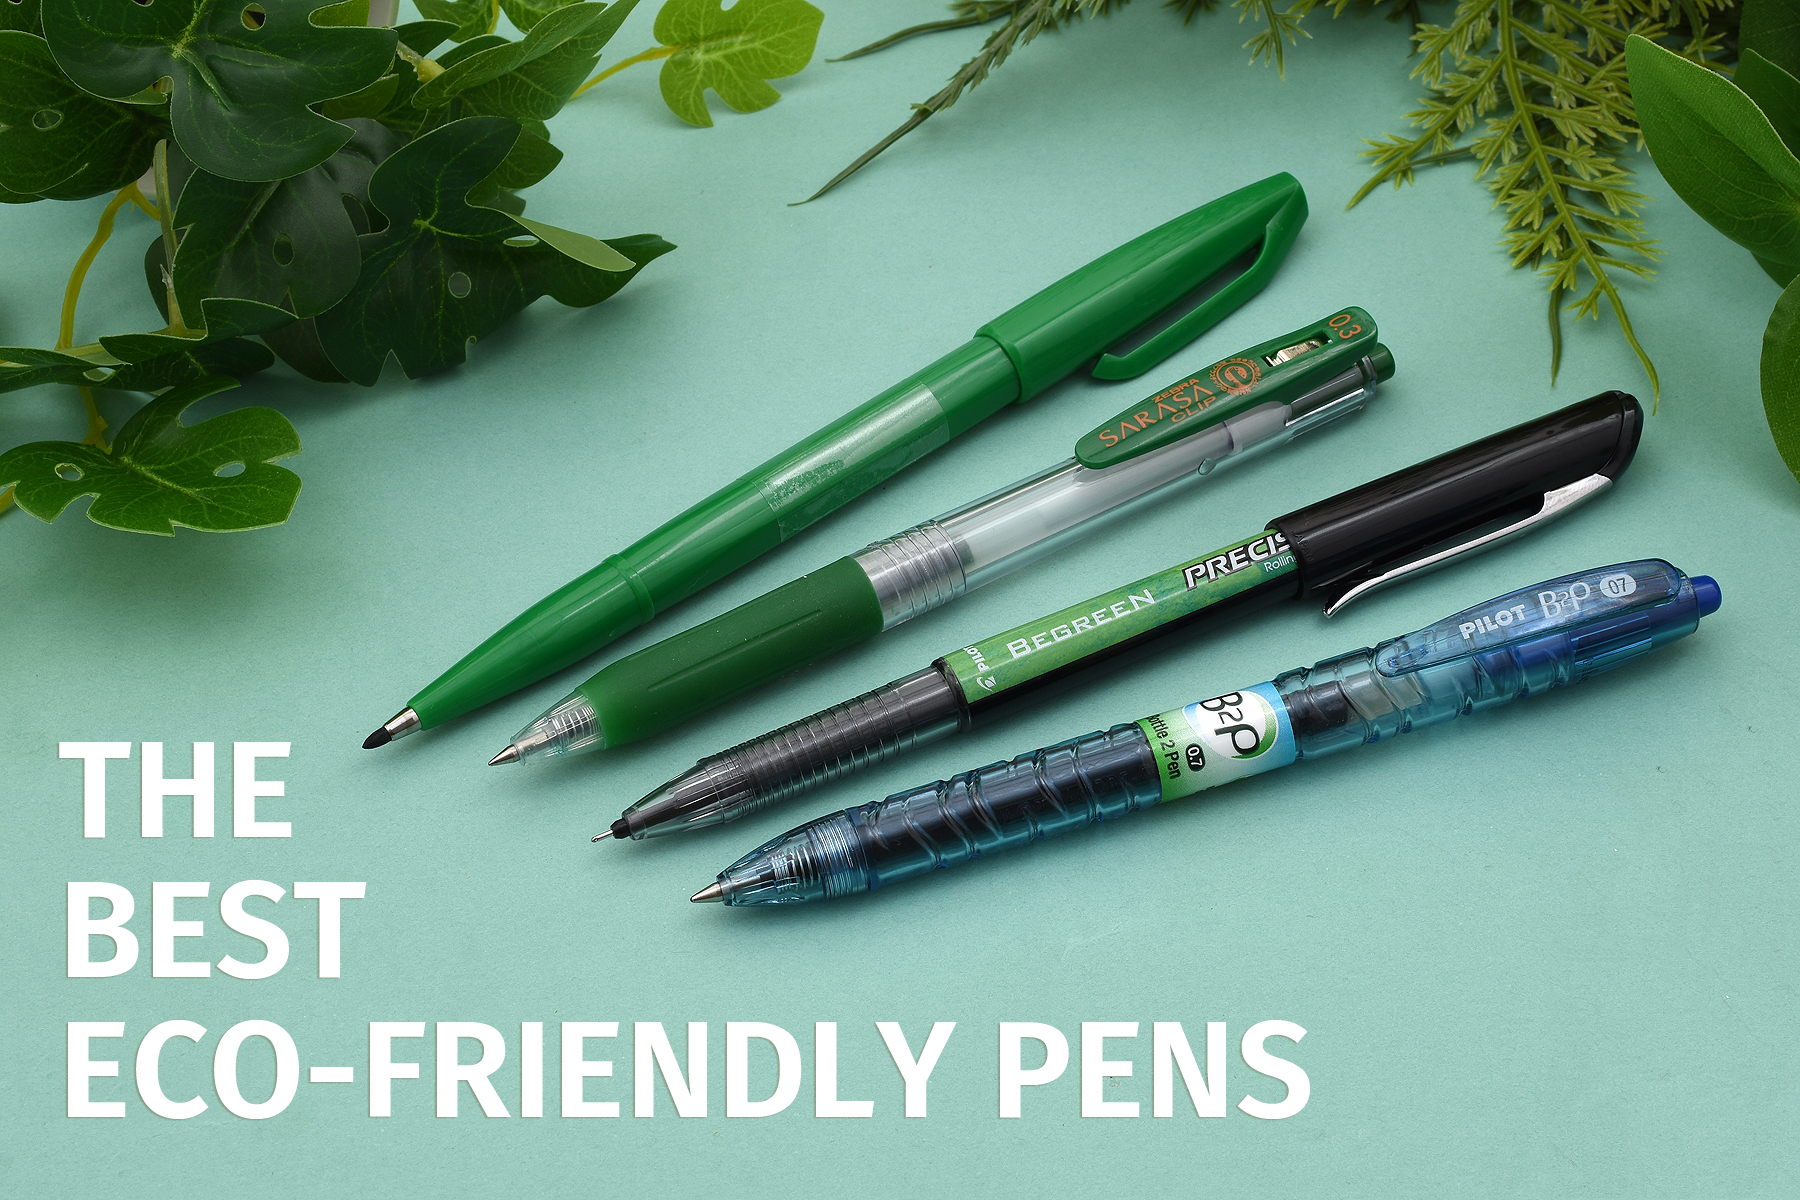 The Best Eco-Friendly Pens